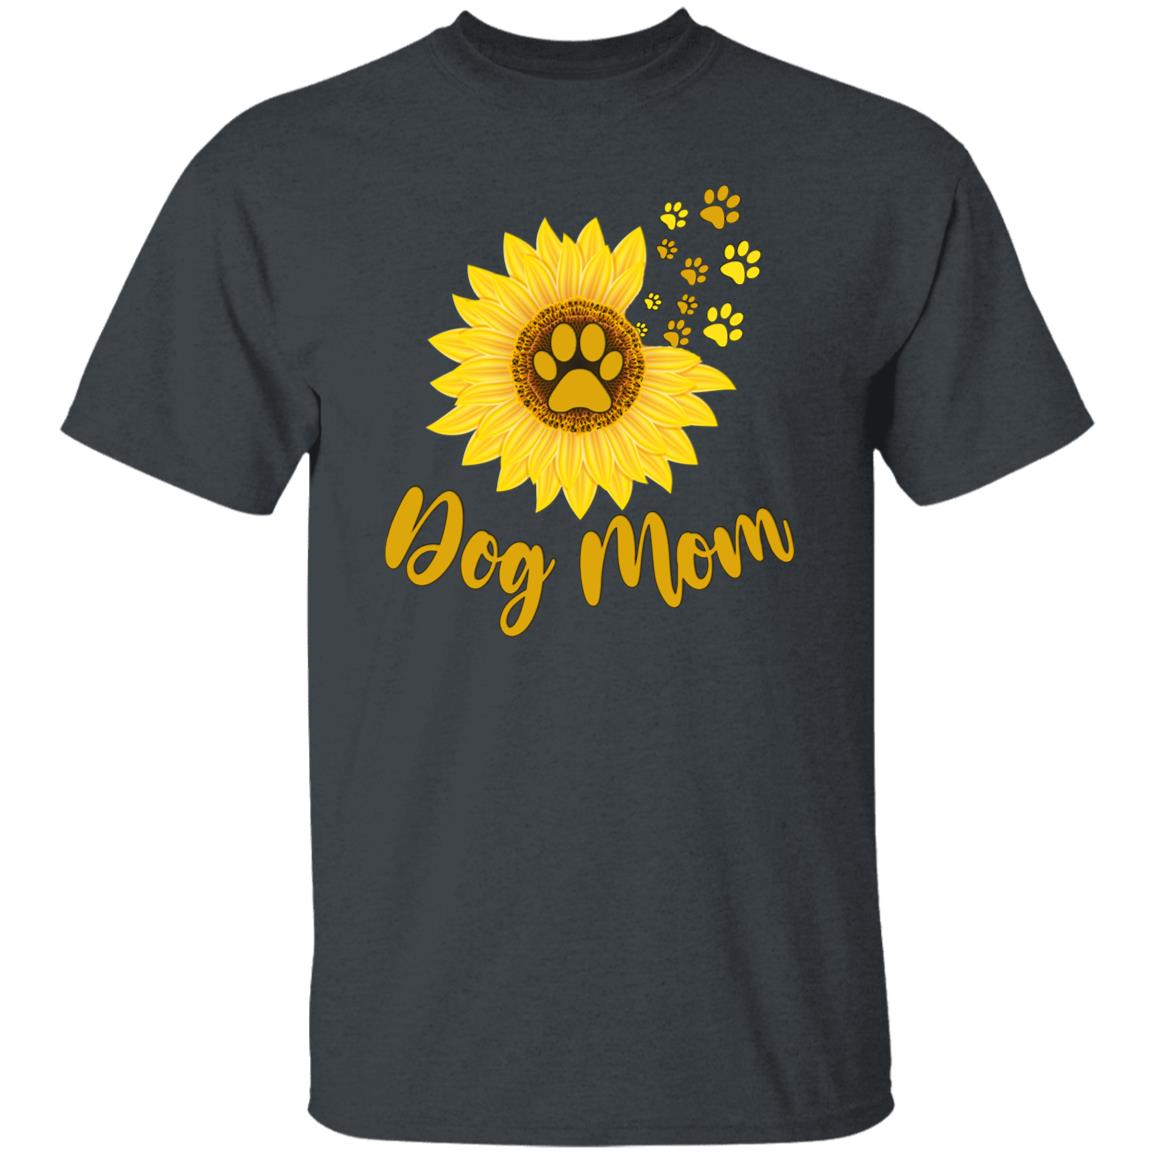 Dog Mom Sunflower Shirt